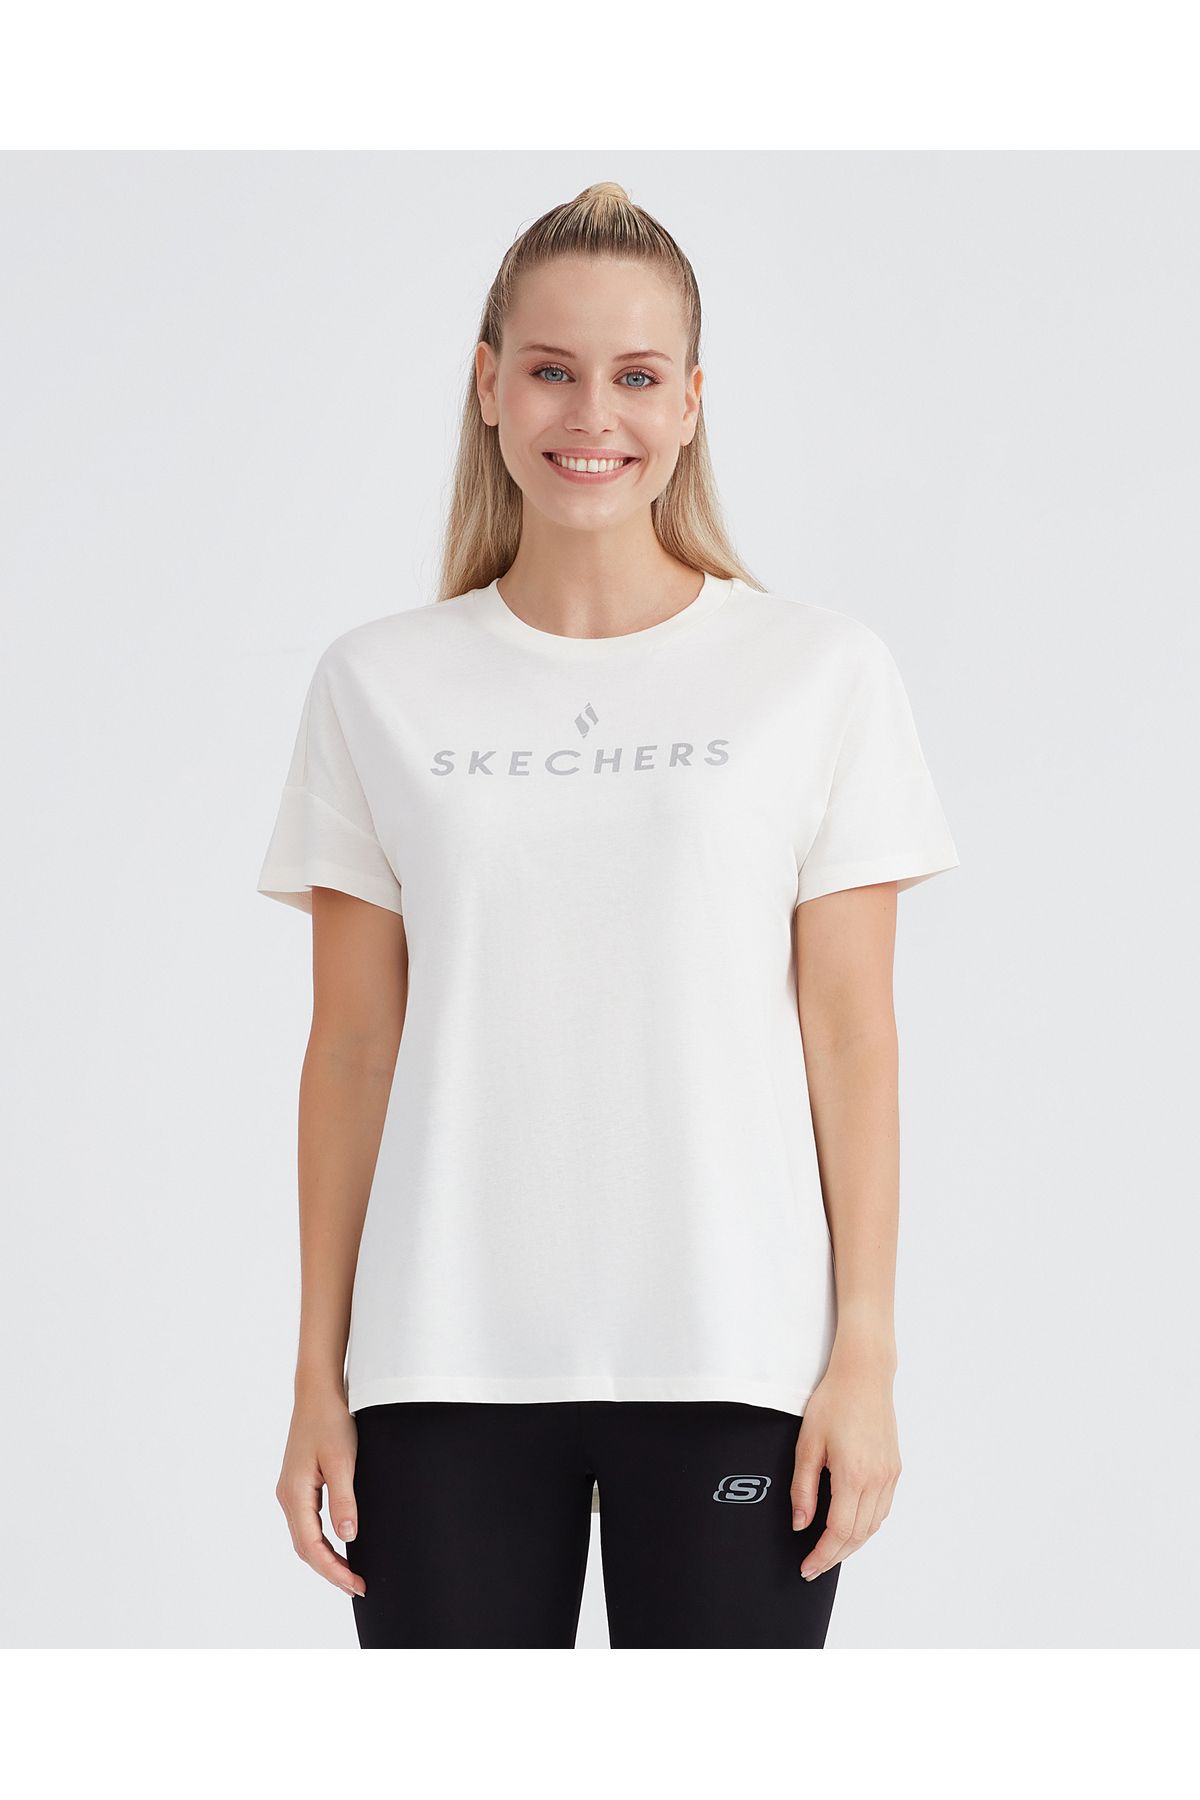 Skechers W Graphic Tee Crew Neck T-shirt Kadın Beyaz Tshirt S232161-102